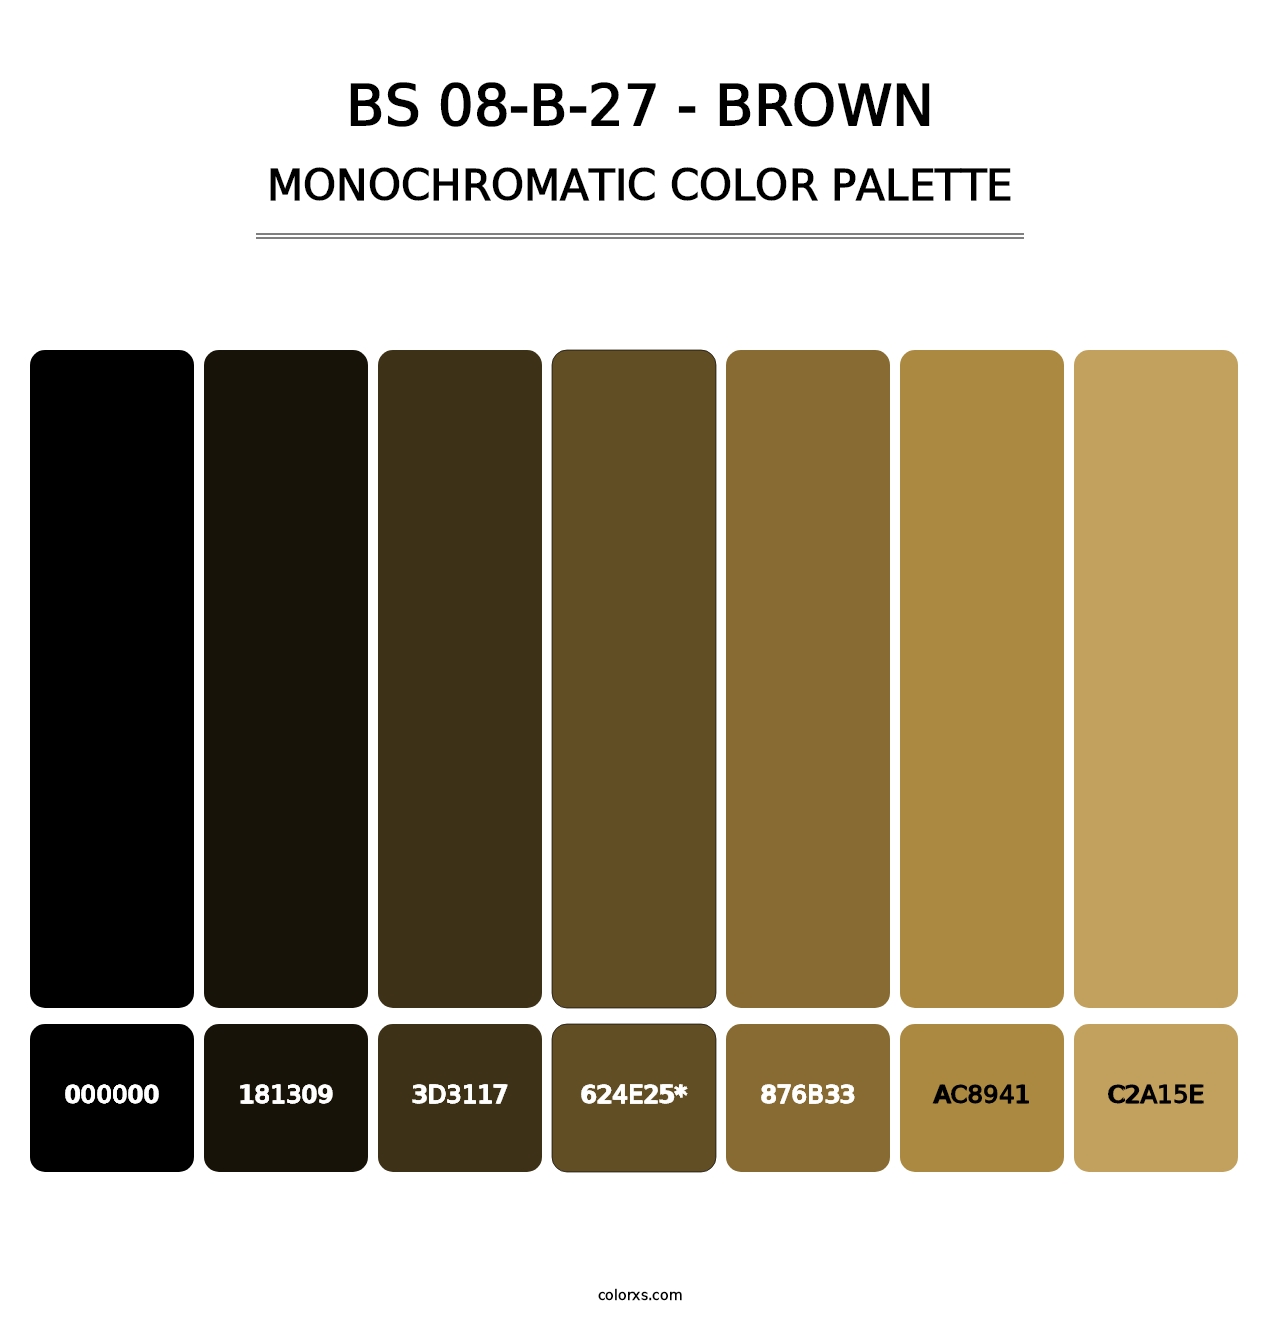 BS 08-B-27 - Brown - Monochromatic Color Palette